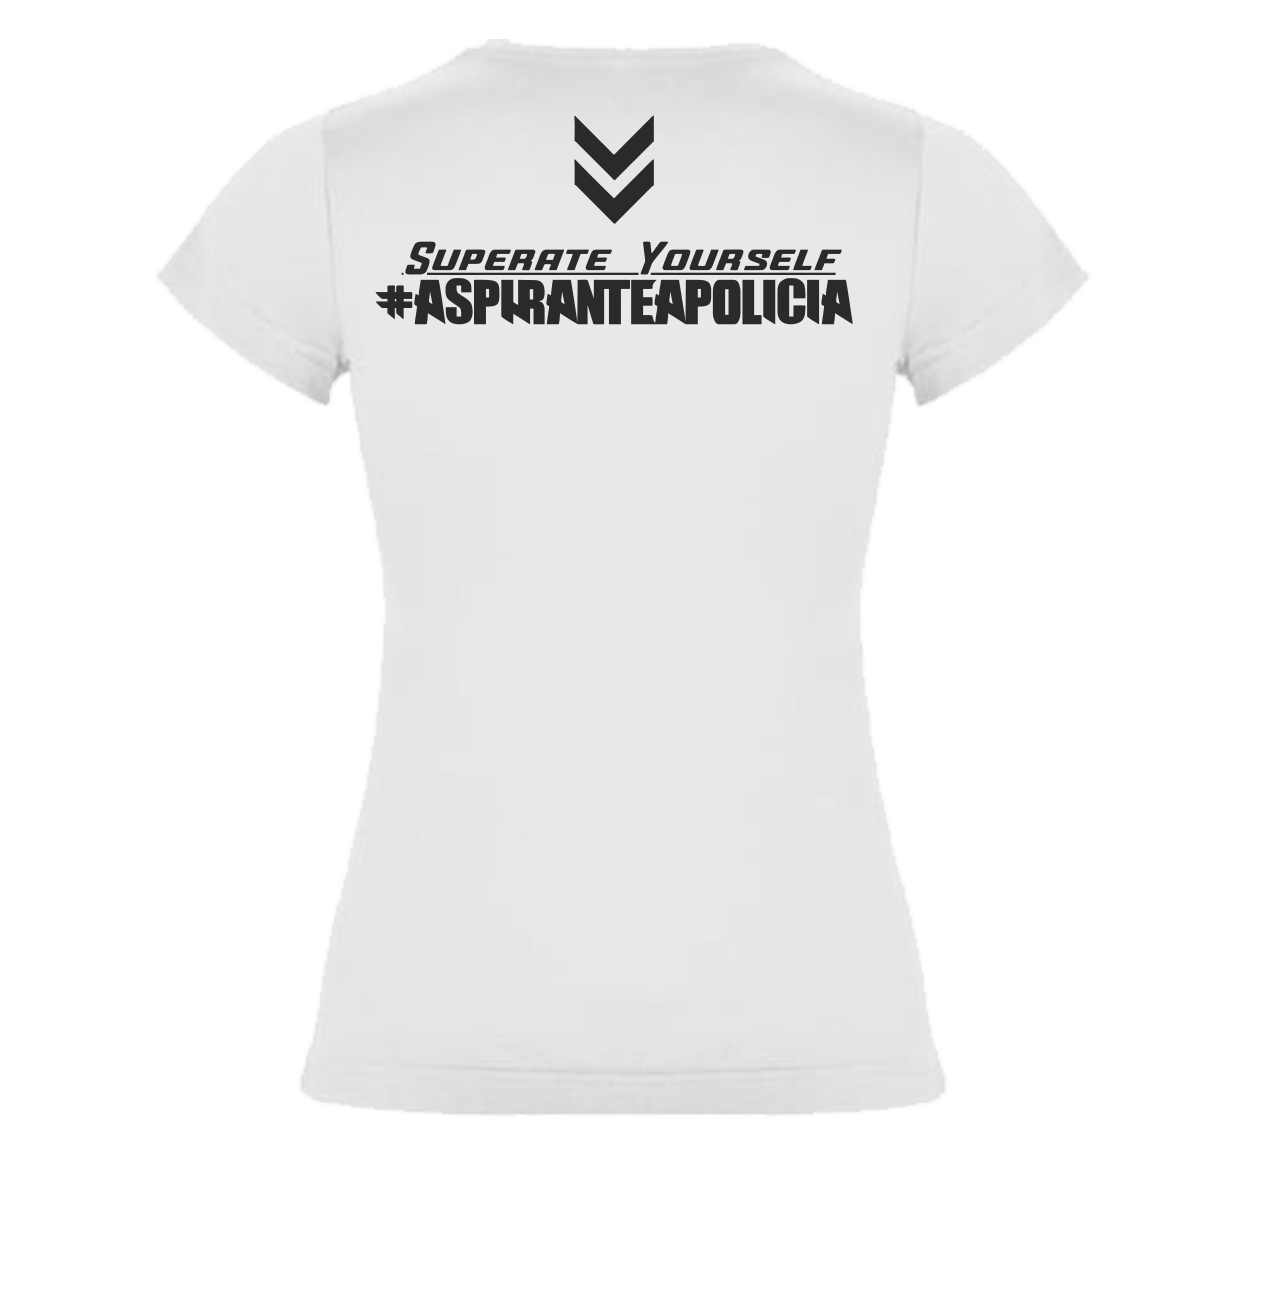 Camiseta Aspiranteapolicia 2.0